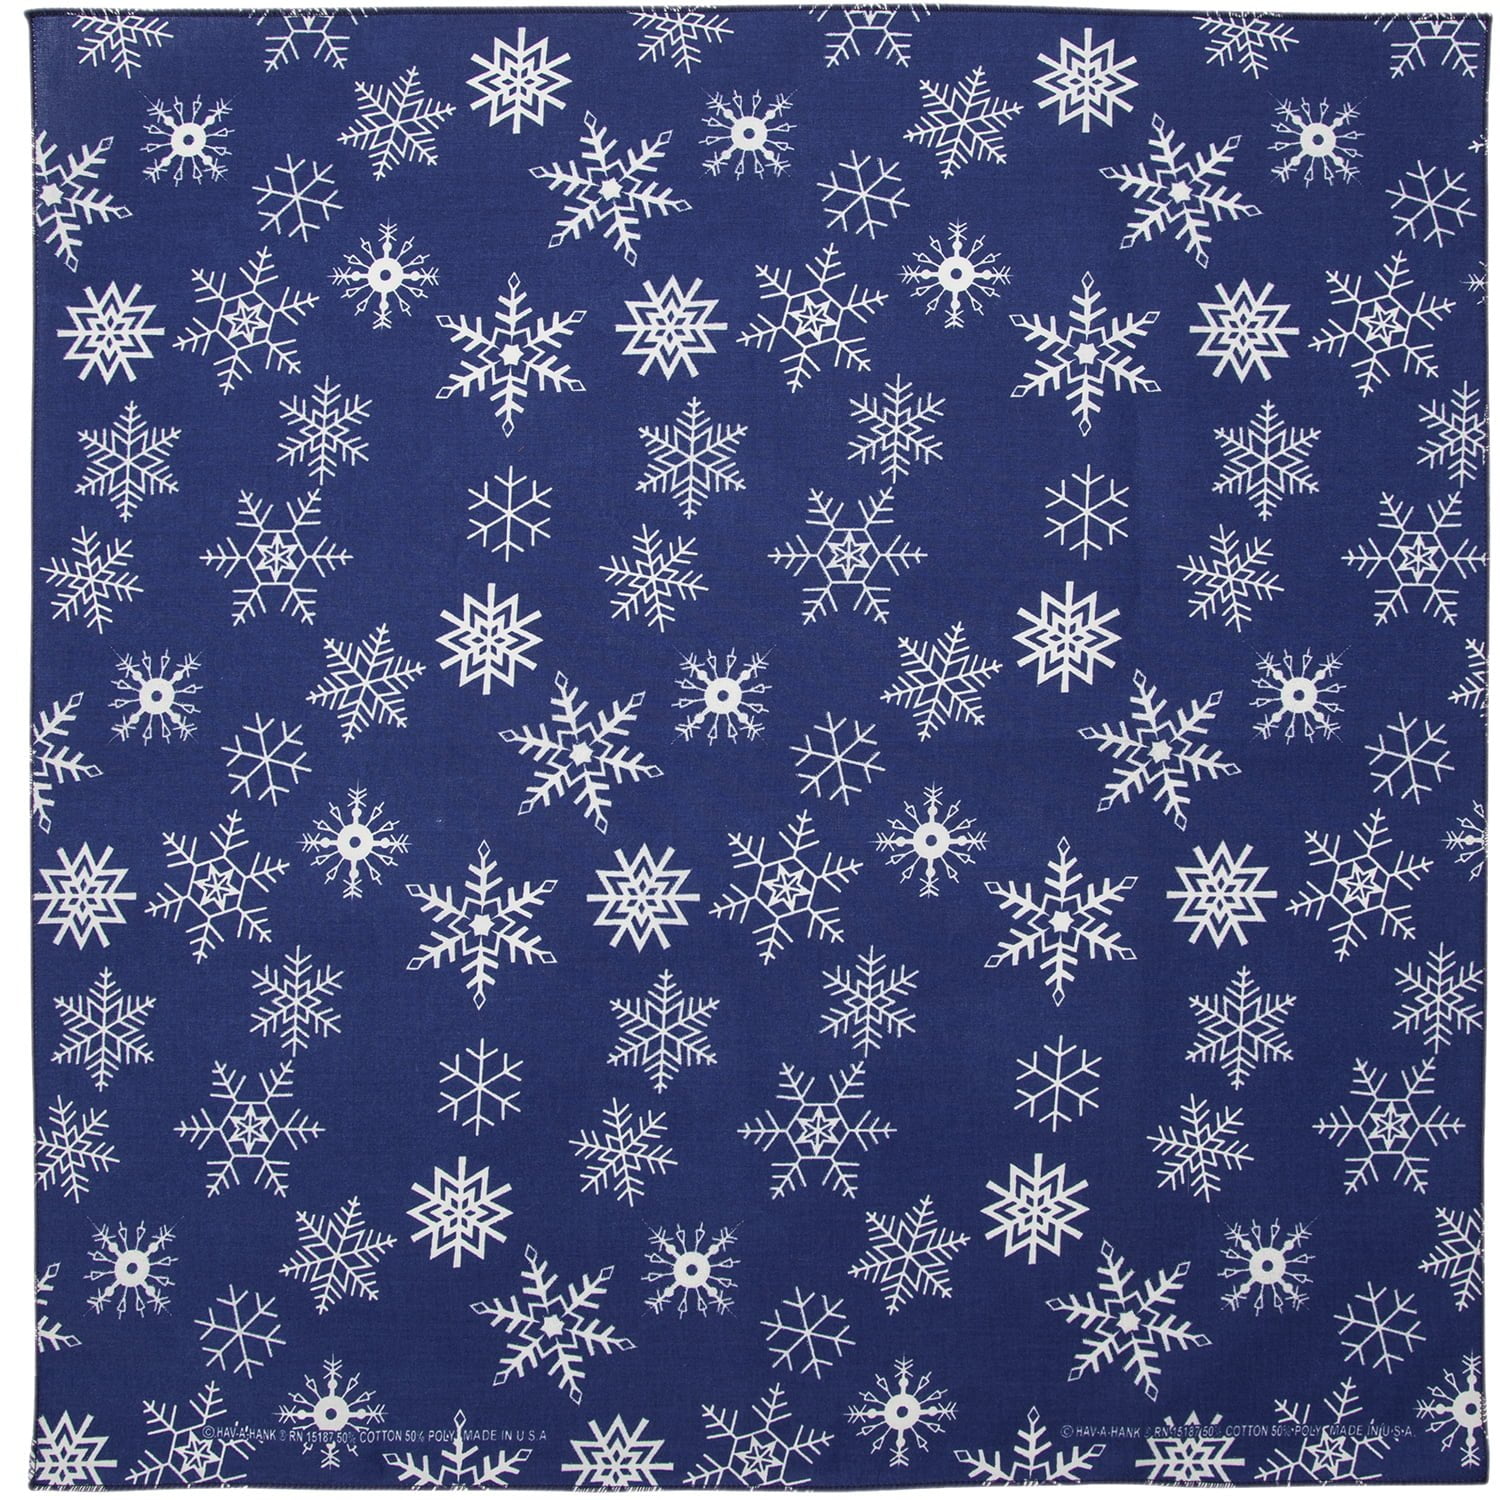 Glitter Snowflake BANDANAs - Dozen Packed - 22x22